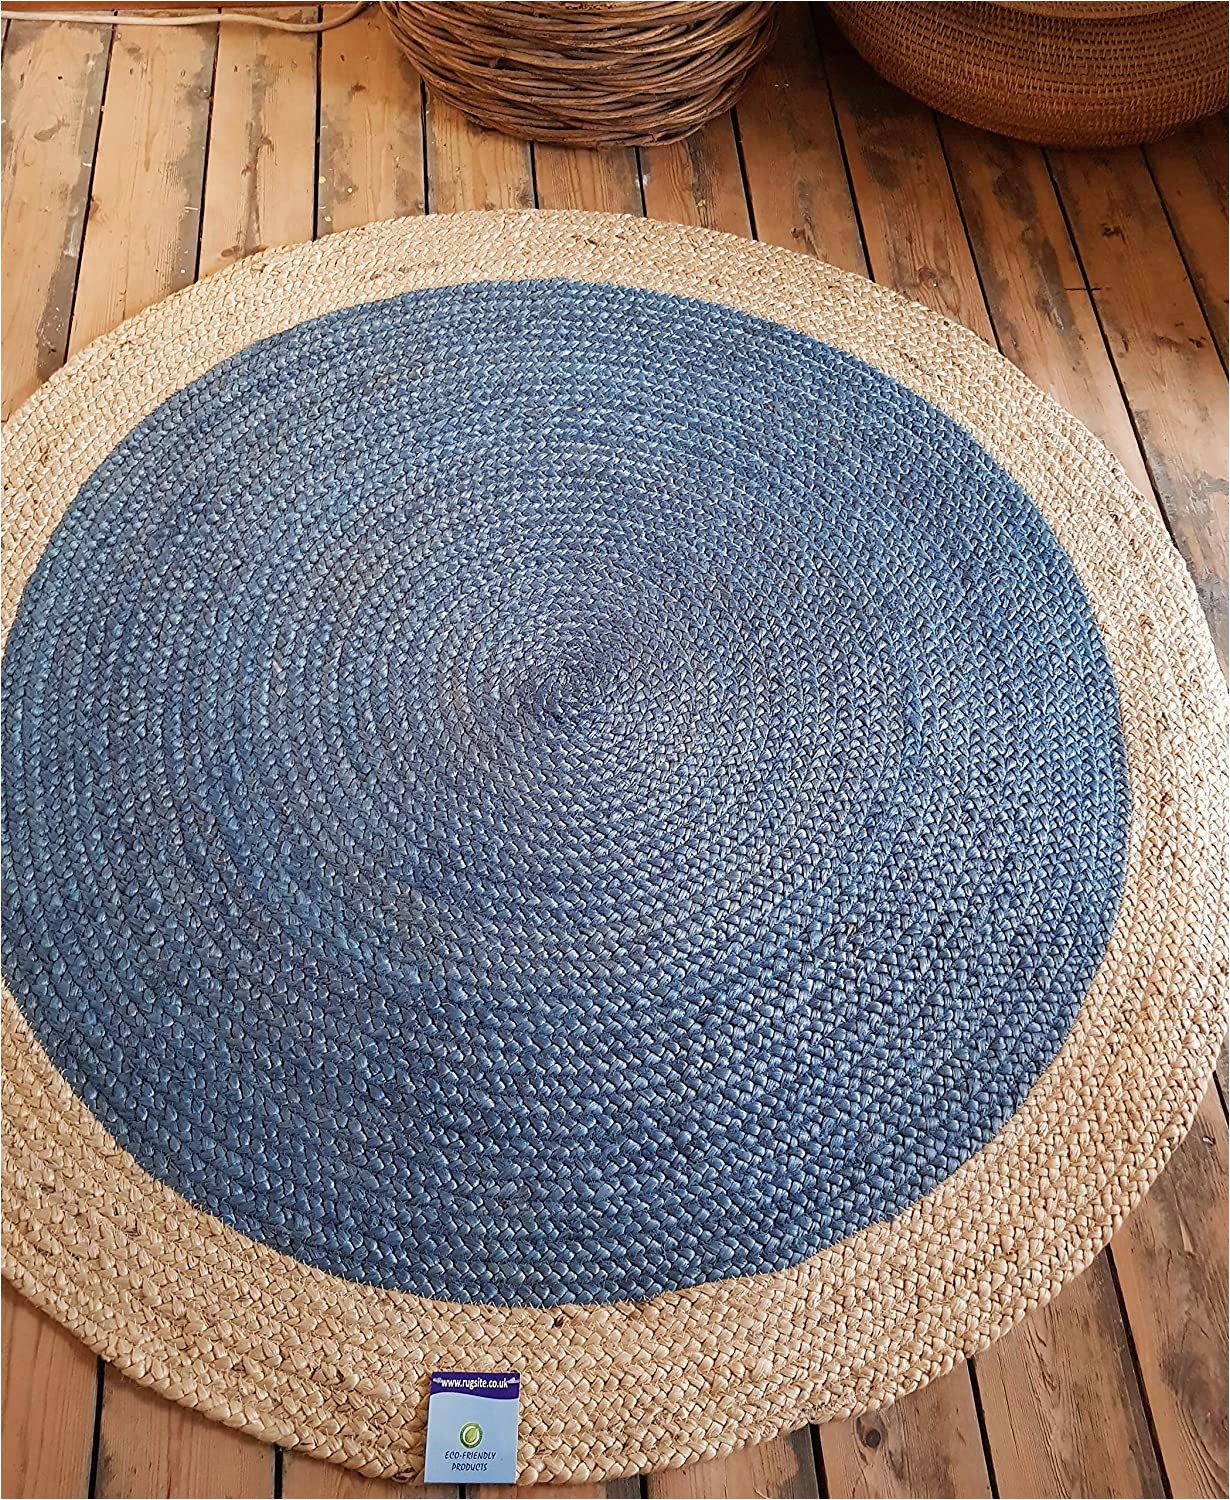 Blue Jute Rug Round 120x120cm Round Circular Blue with Beige Natural Jute Circle